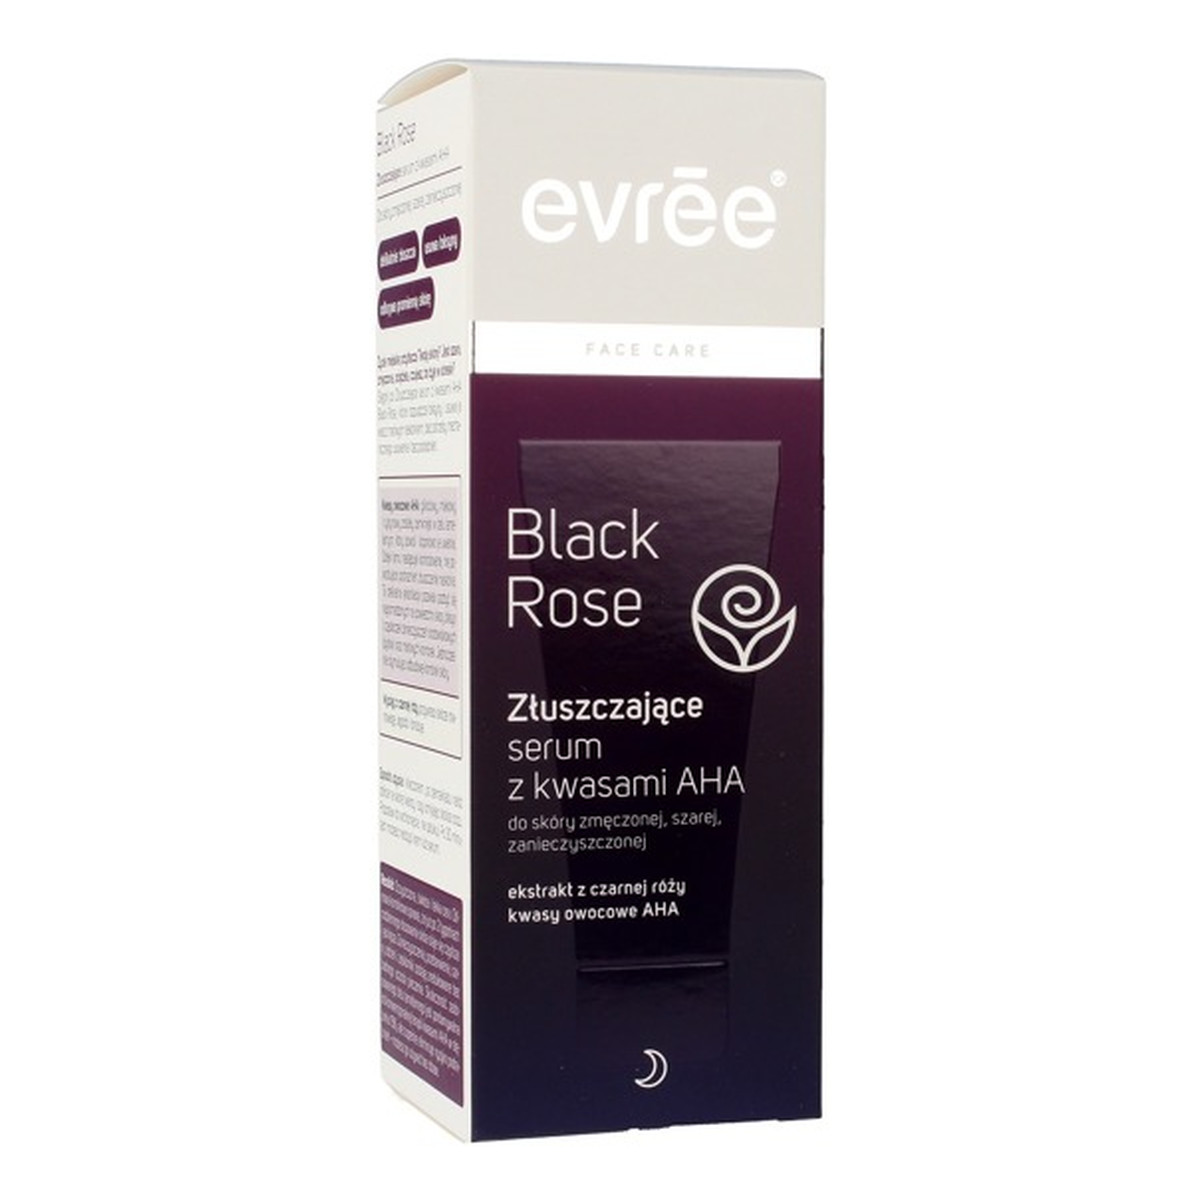 Evree Black Rose Serum złuszczające z kwasami AHA 75ml